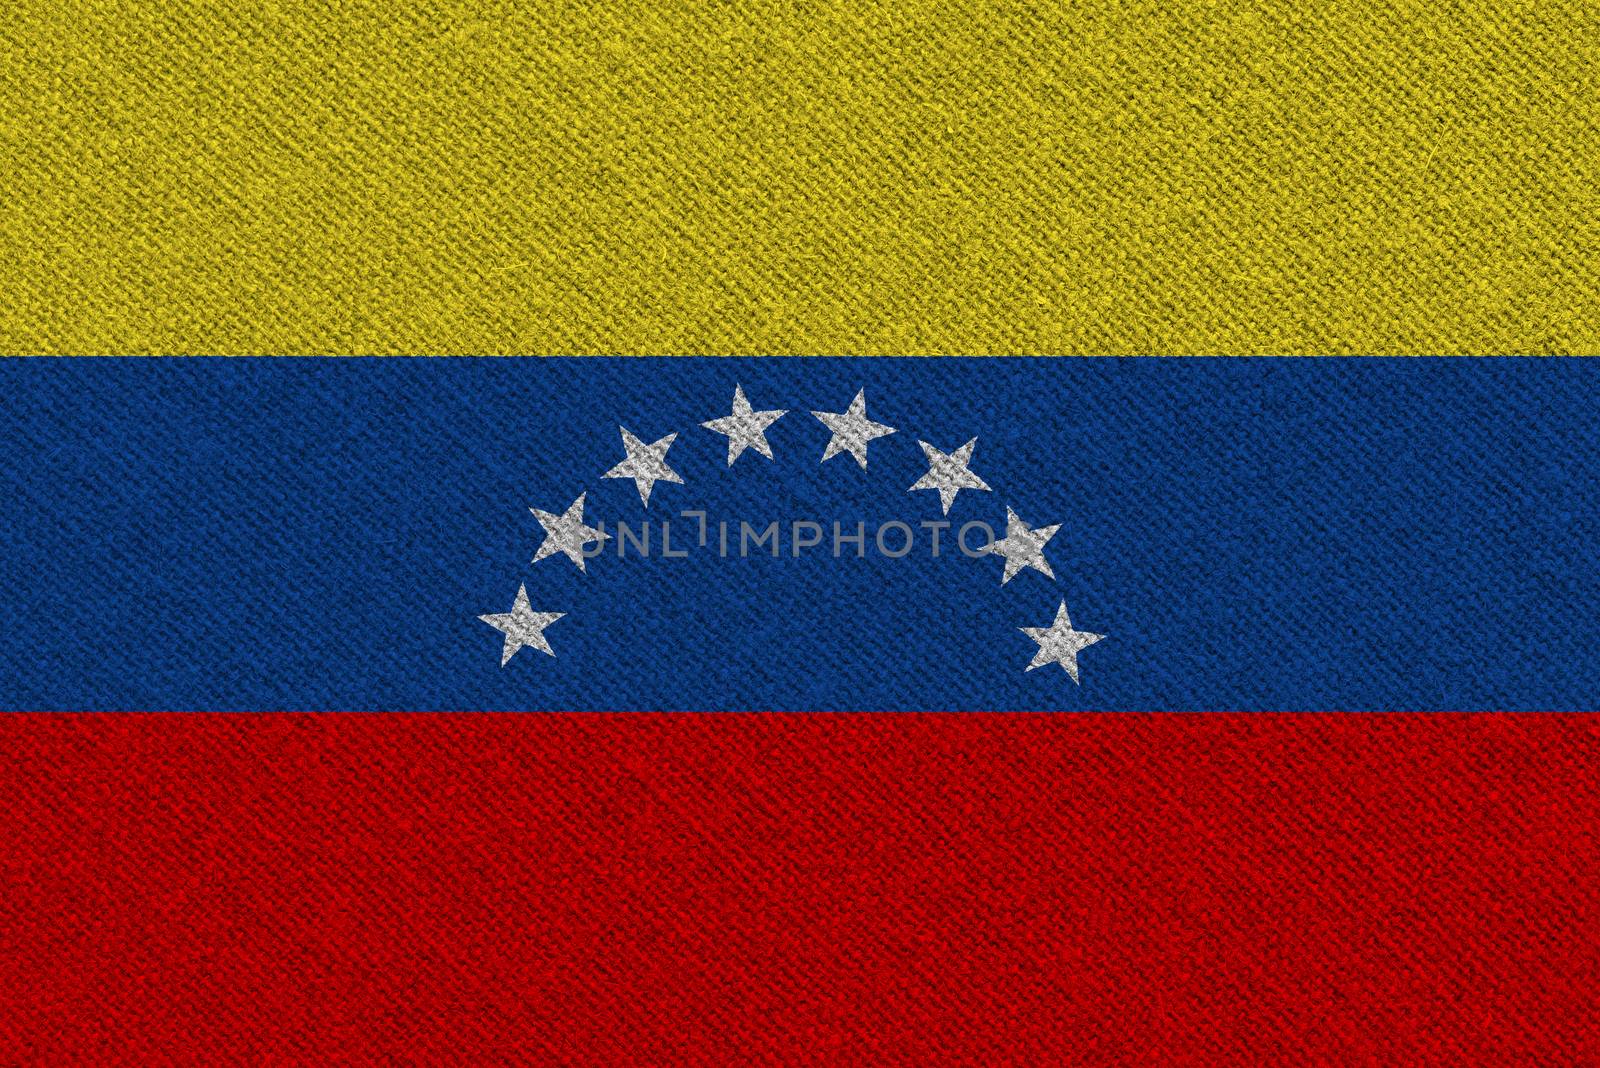 Venezuela fabric flag. Patriotic background. National flag of Venezuela